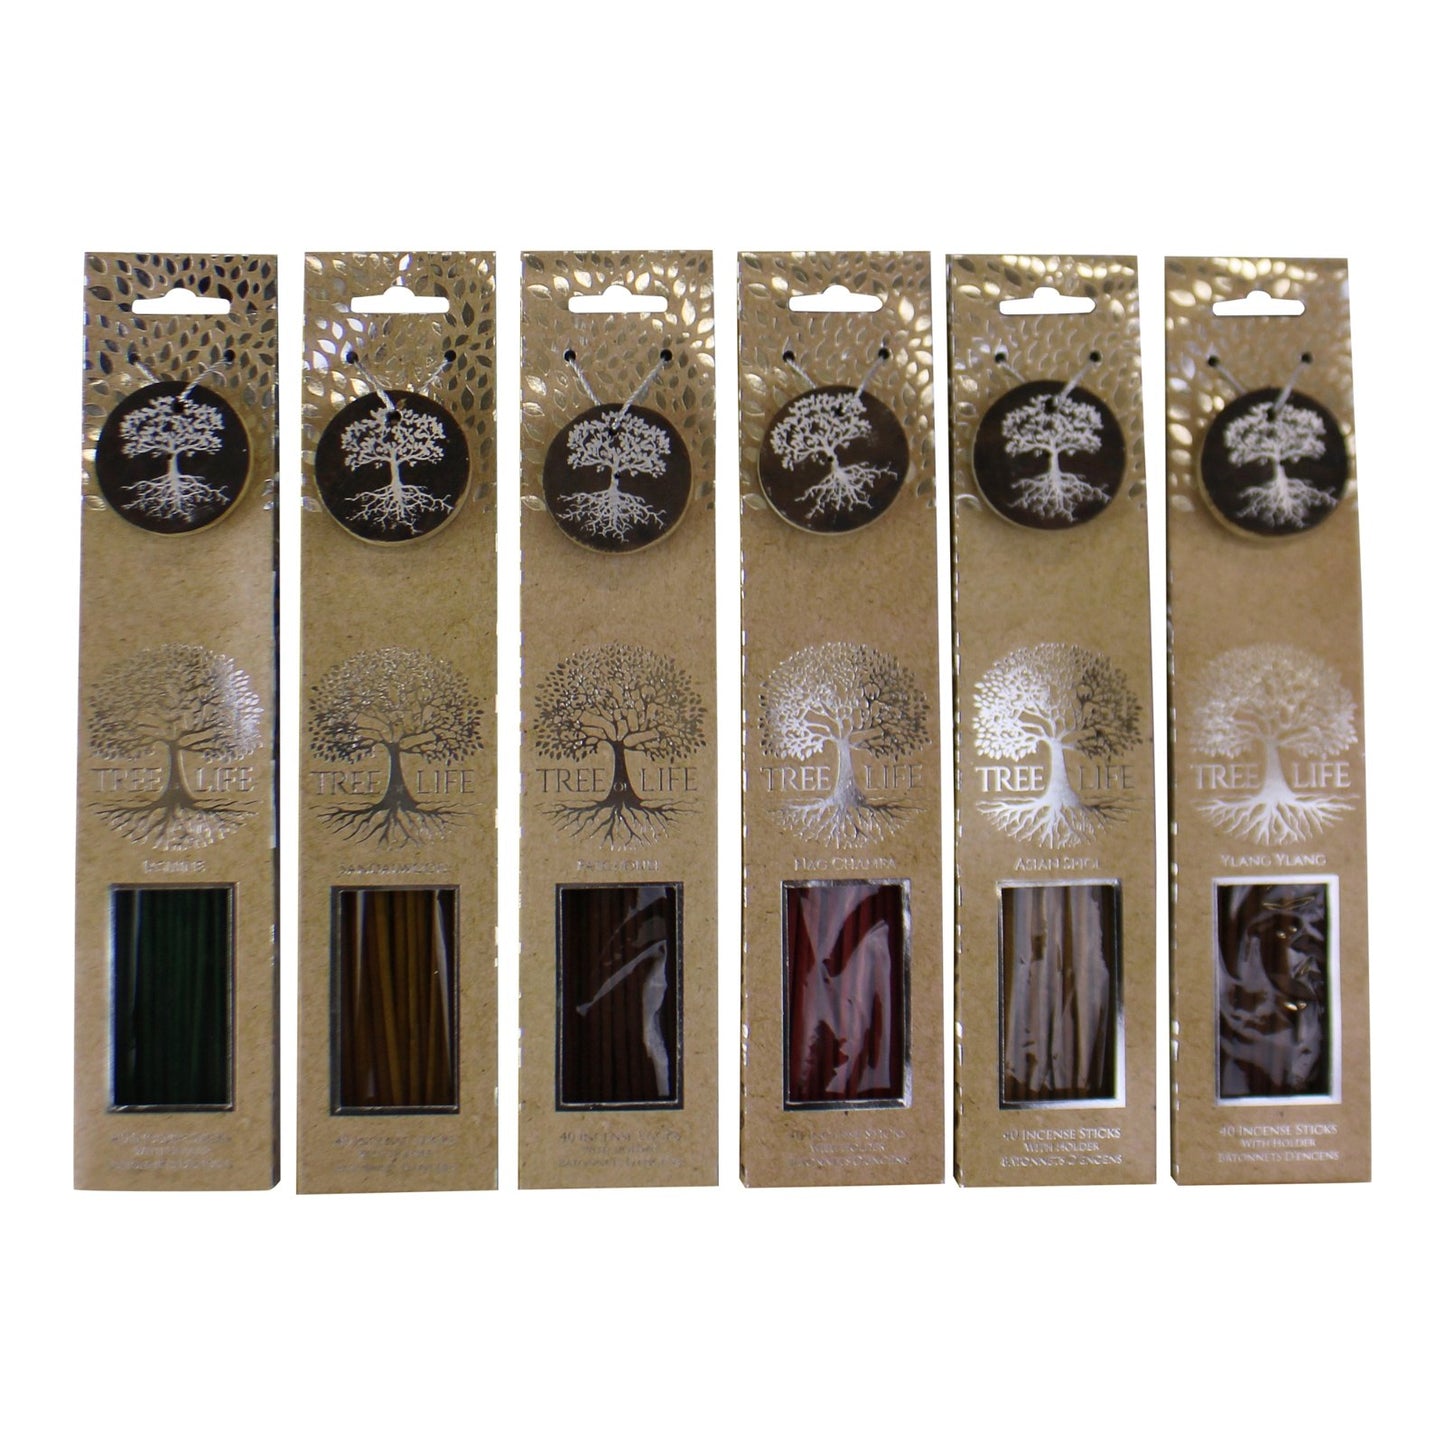 Set of 6 Fragranced Incense Sticks With Holders, Tree Of Life Design - Kaftan direct